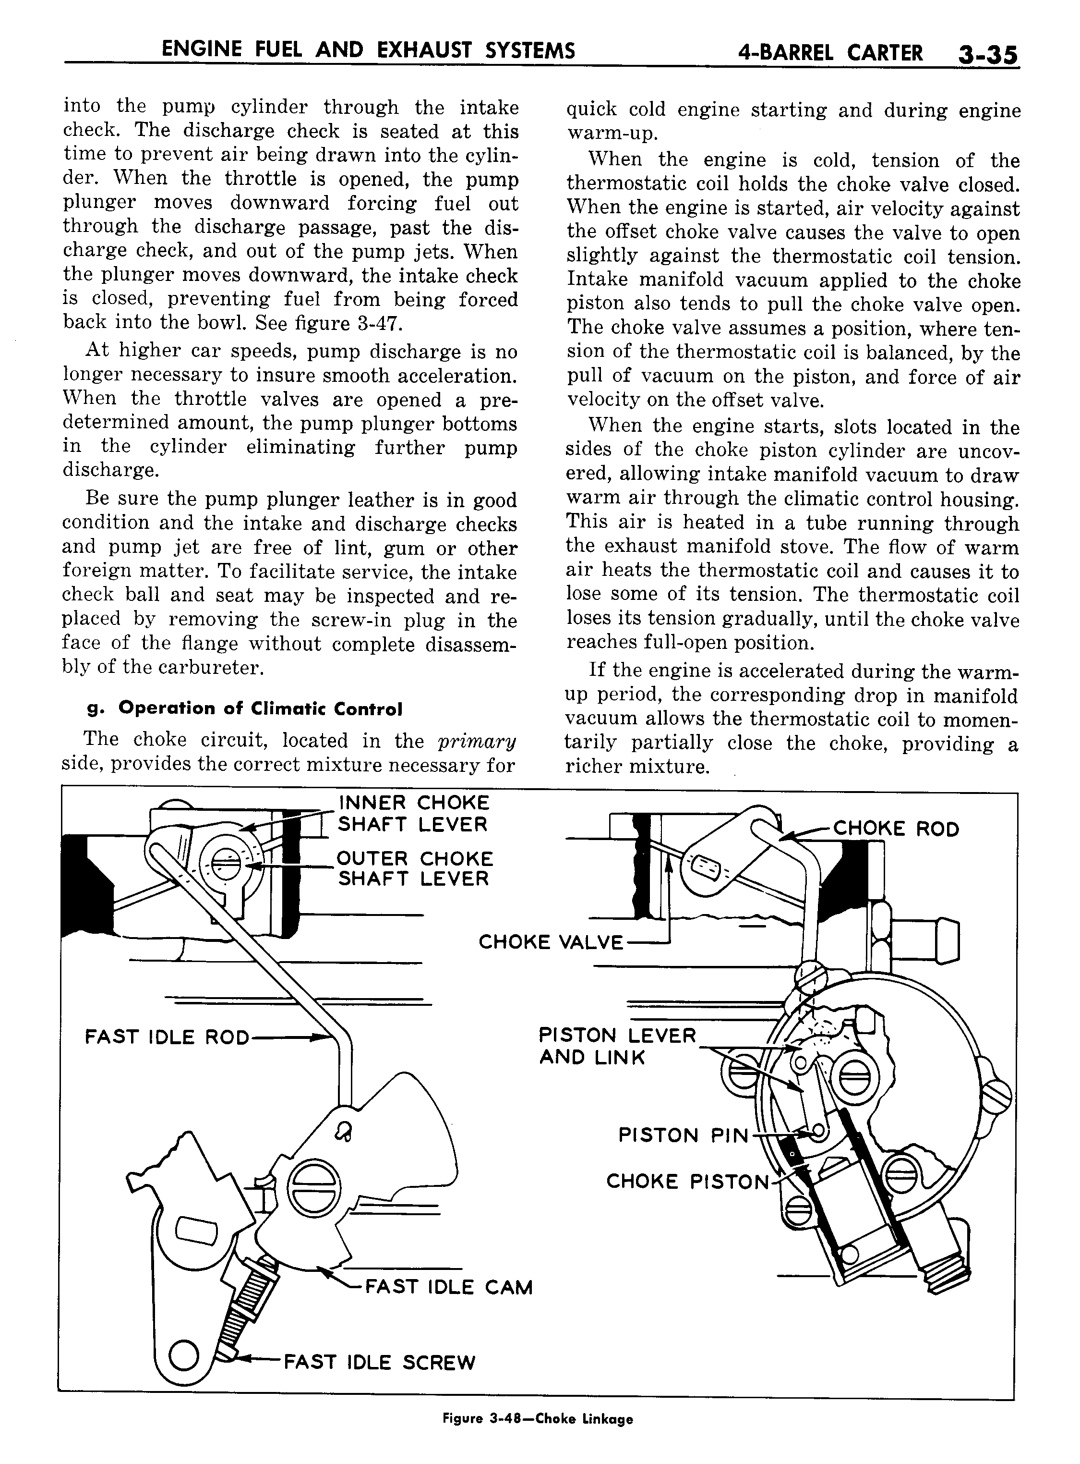 n_04 1957 Buick Shop Manual - Engine Fuel & Exhaust-035-035.jpg